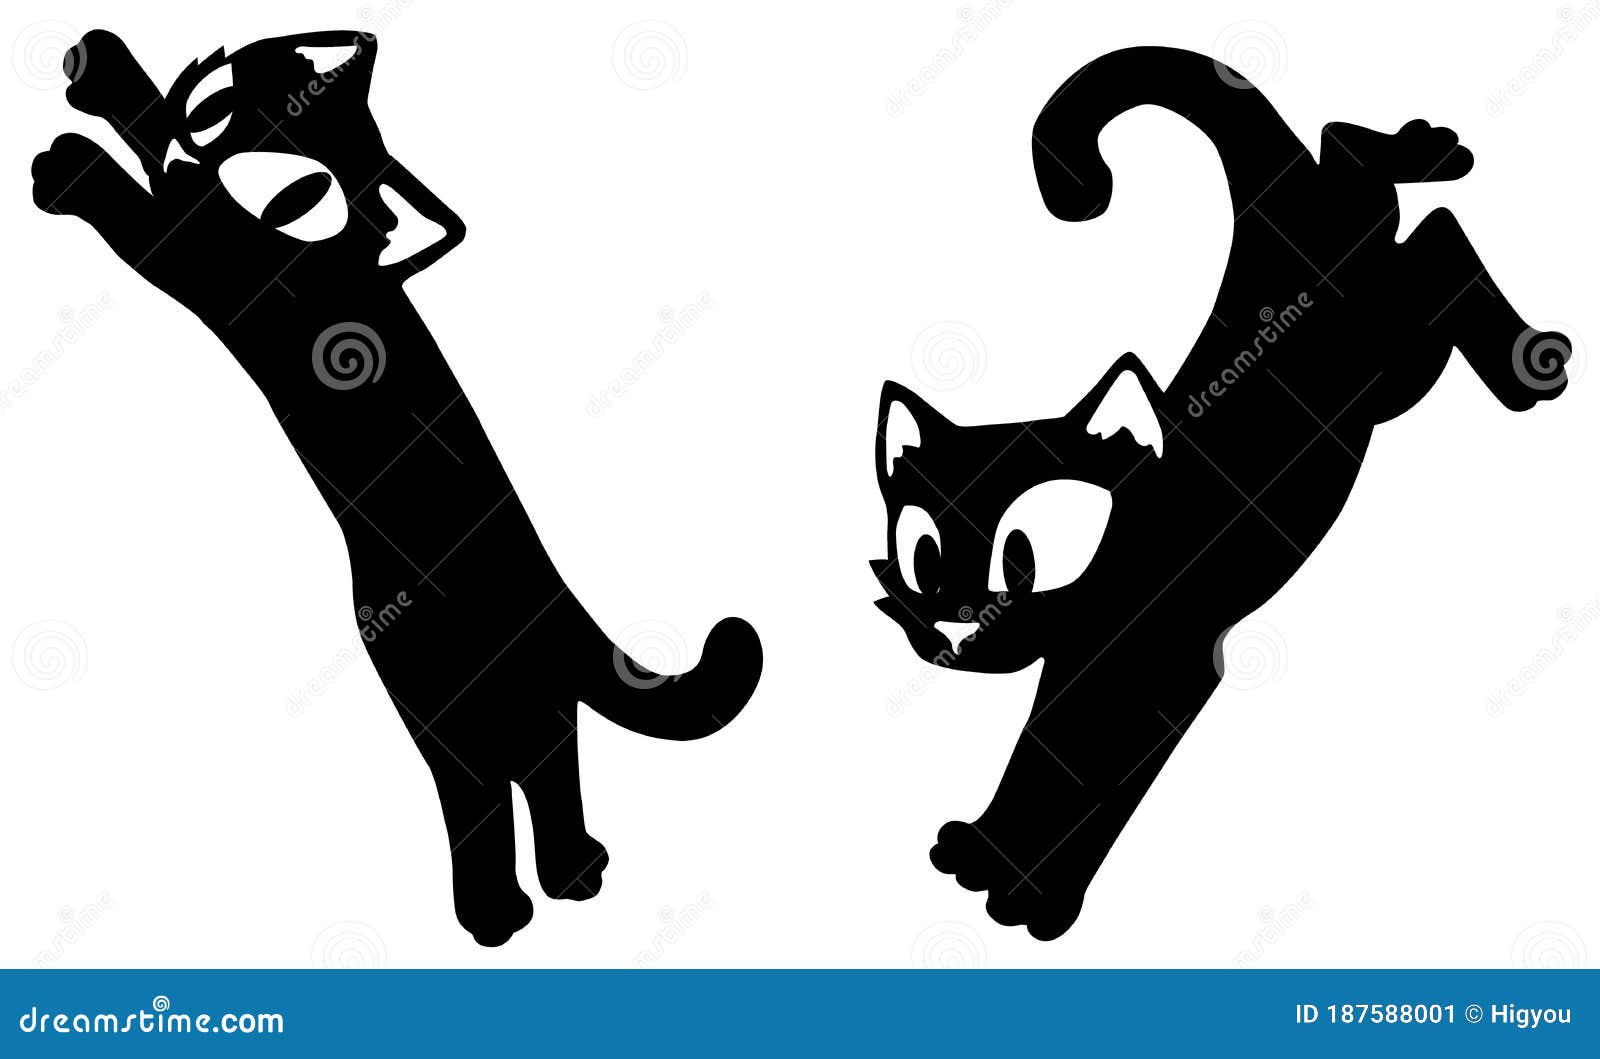  Cat  Black Pounce  Jump Poses  Stock Vector Illustration 